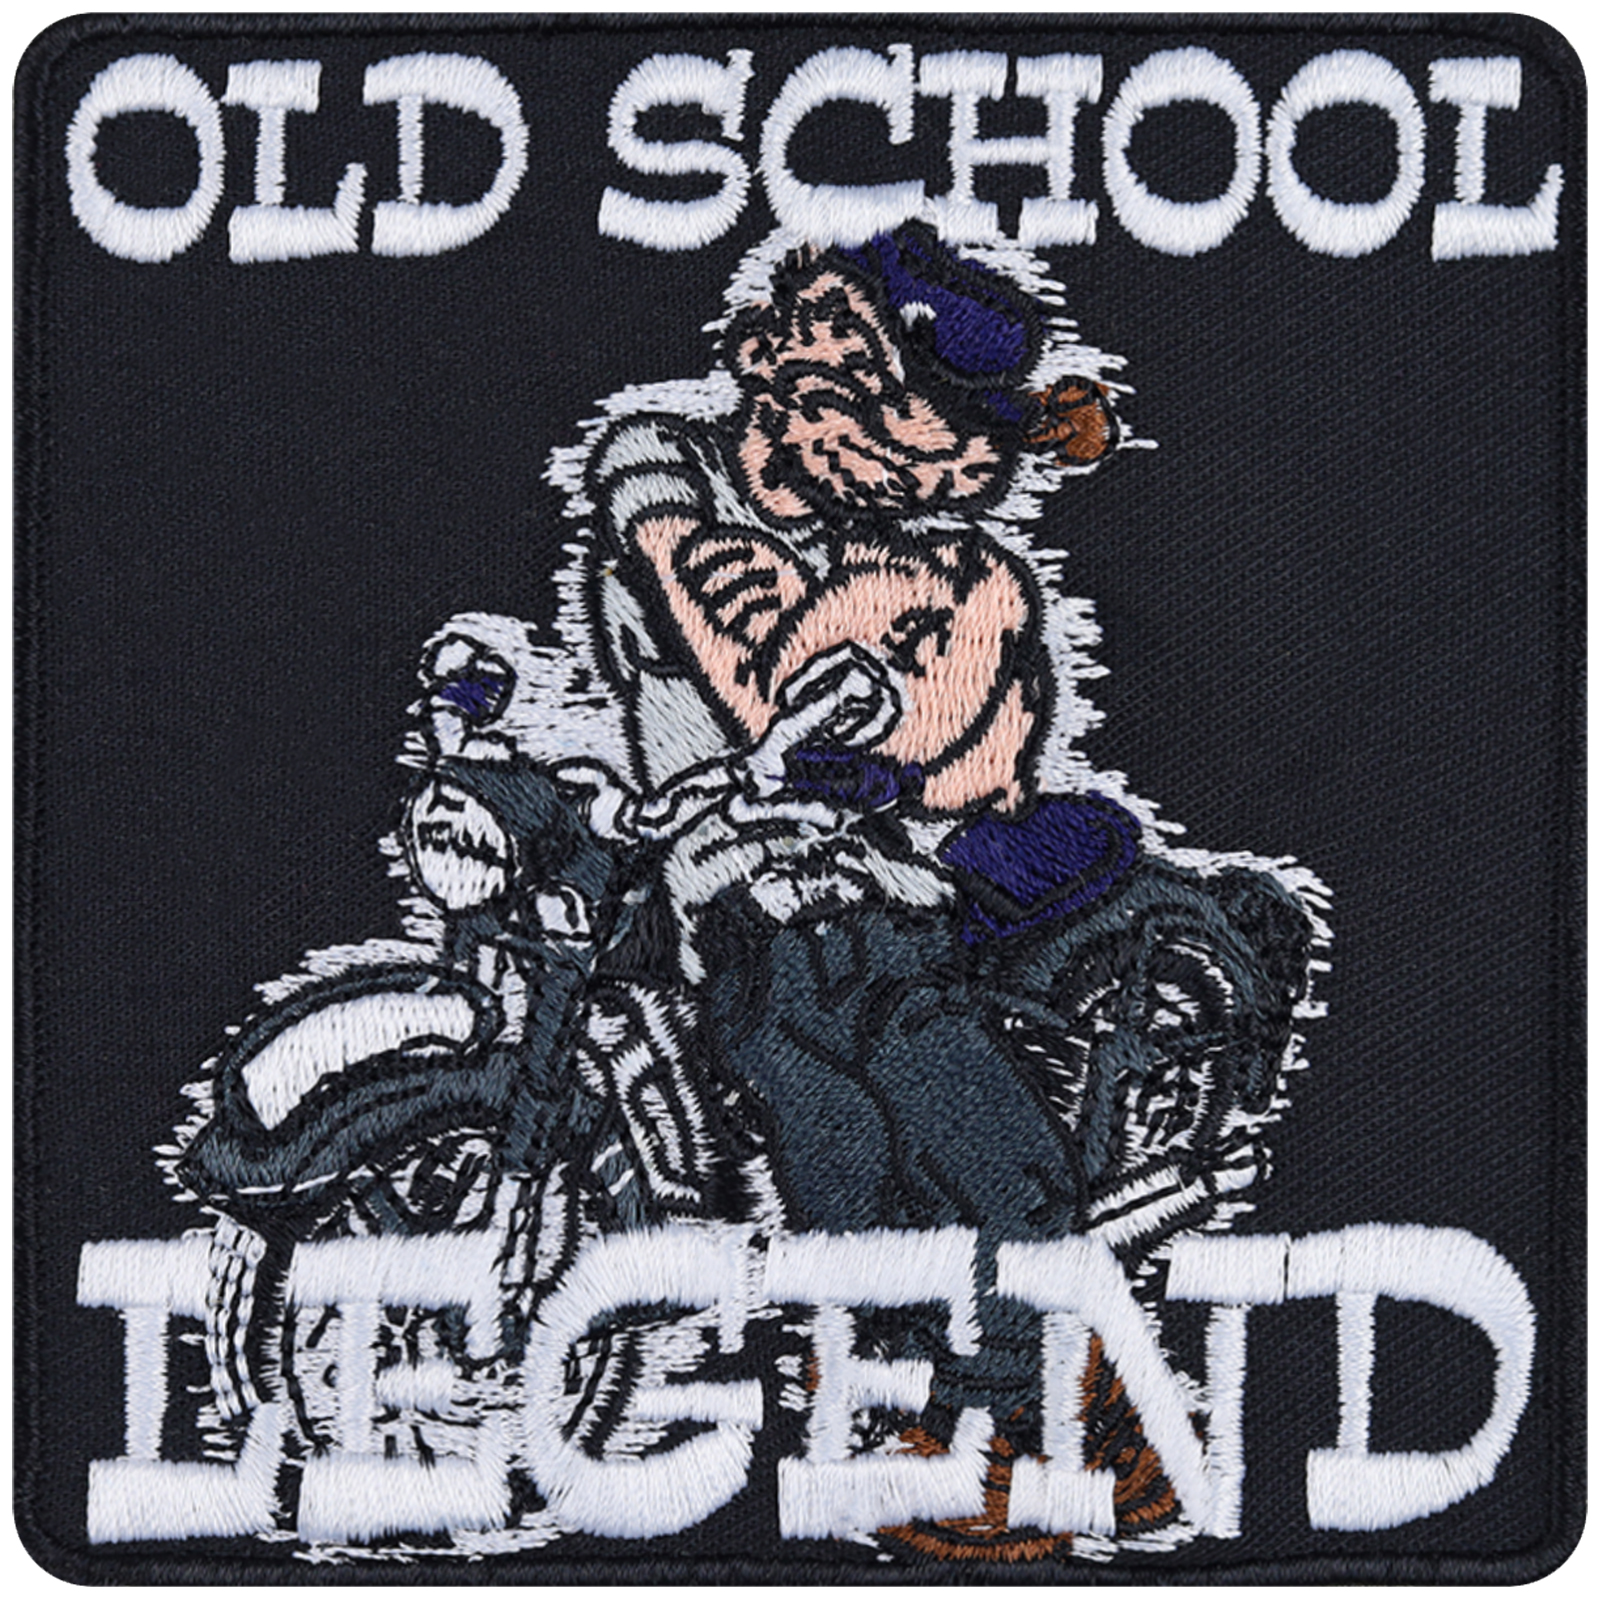 Old School legend - Patch